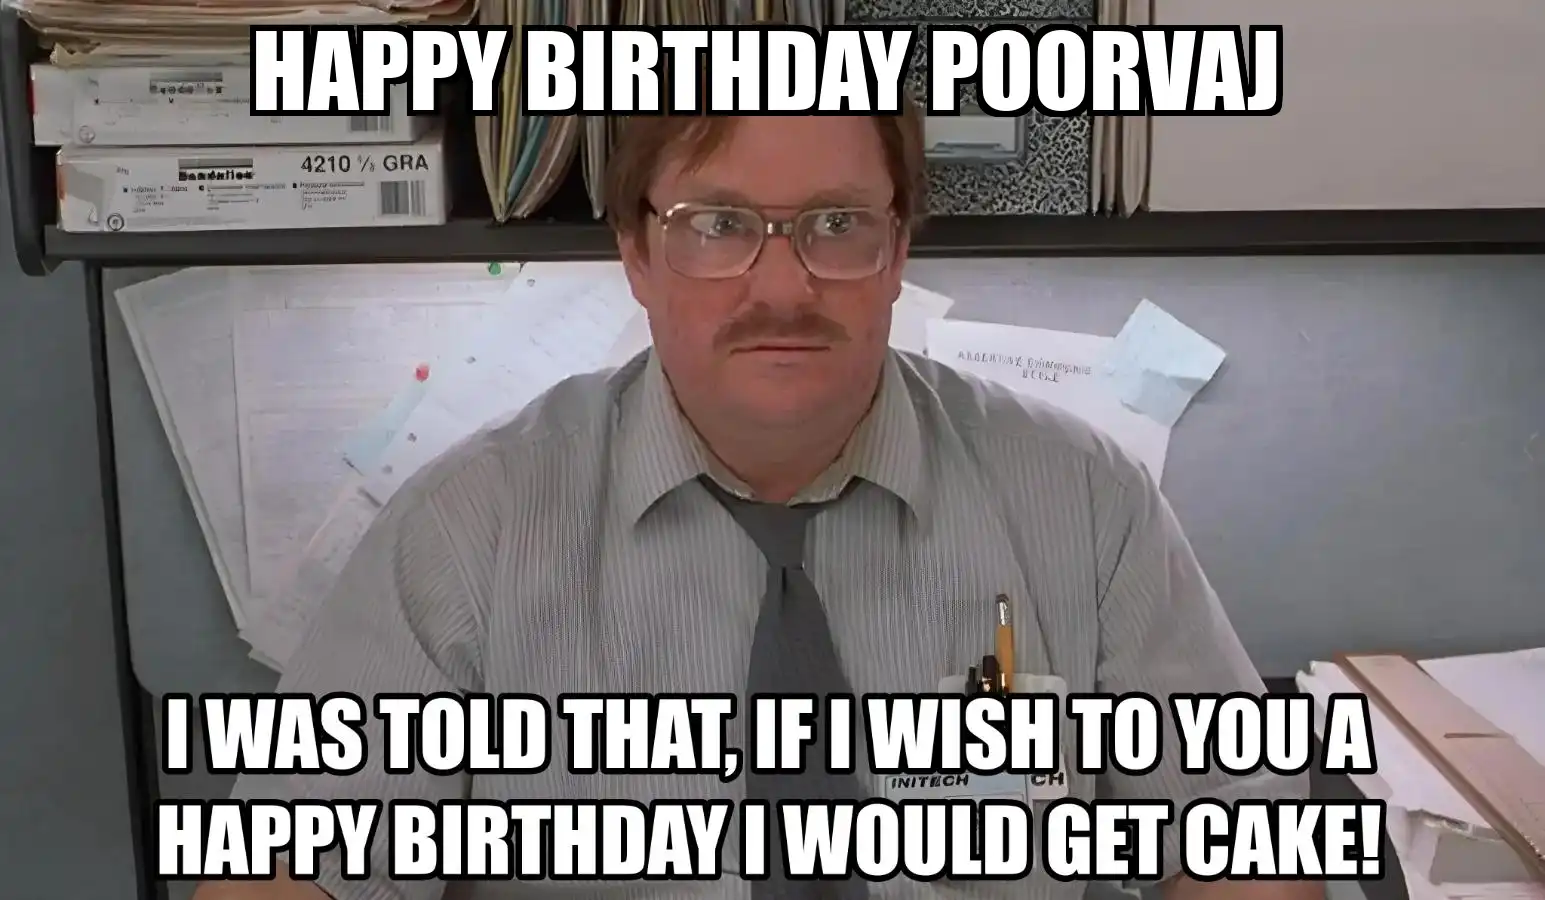 Happy Birthday Poorvaj I Would Get A Cake Meme